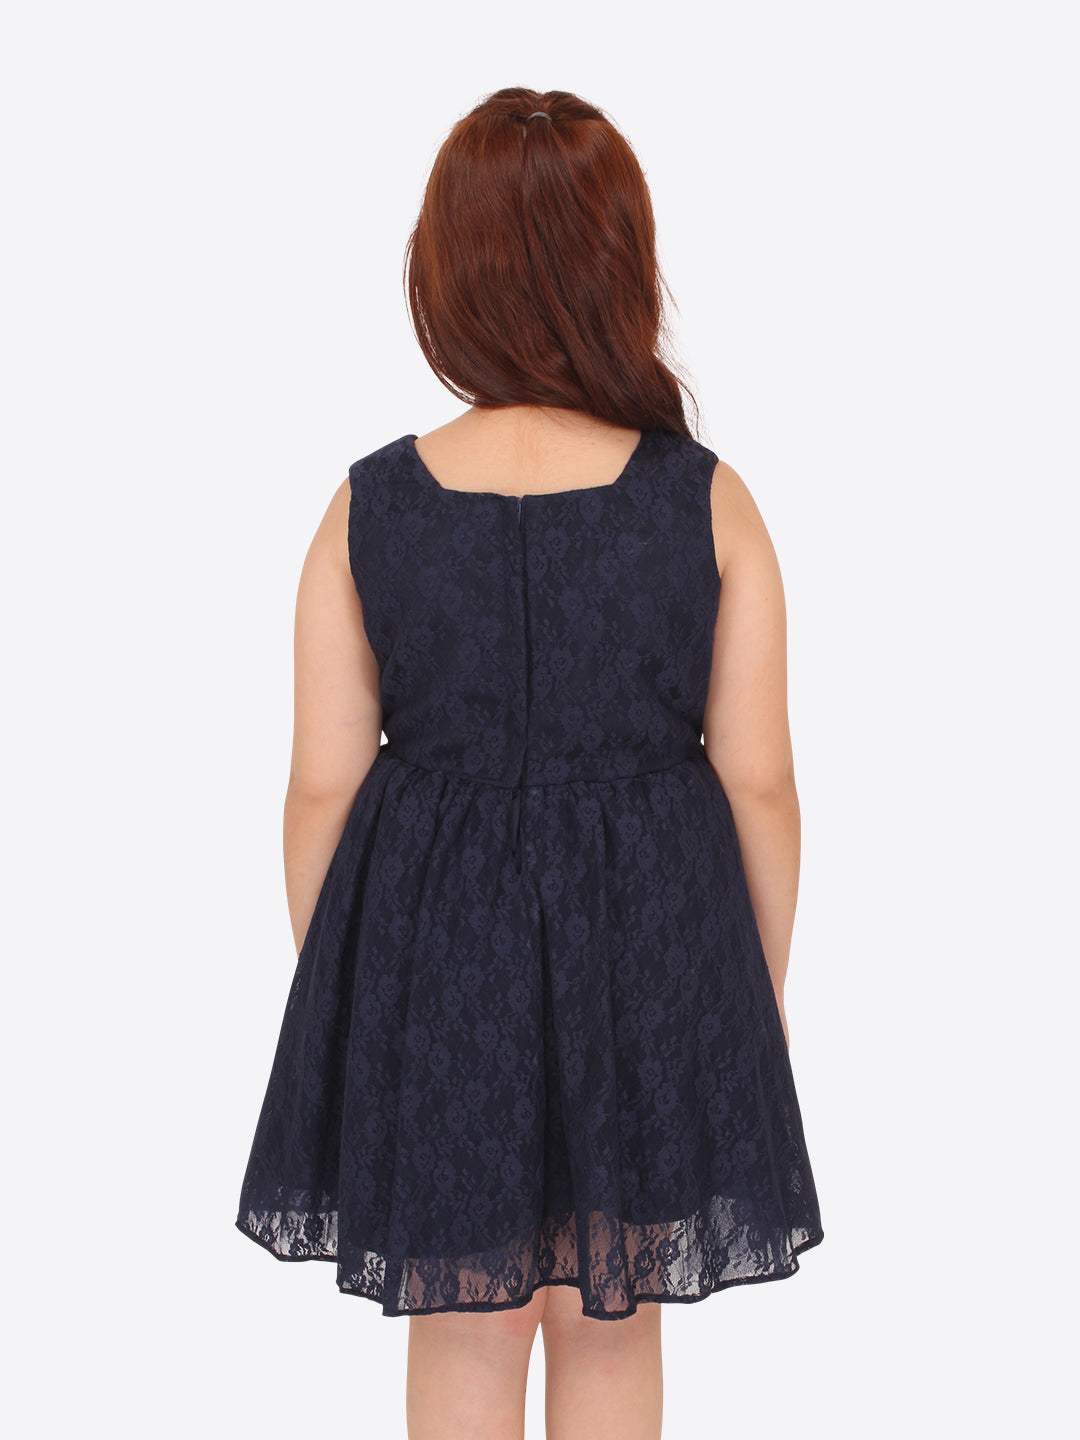 Baby Girls Midi/Knee Length Party Dress  (Dark Blue, Full Sleeve)